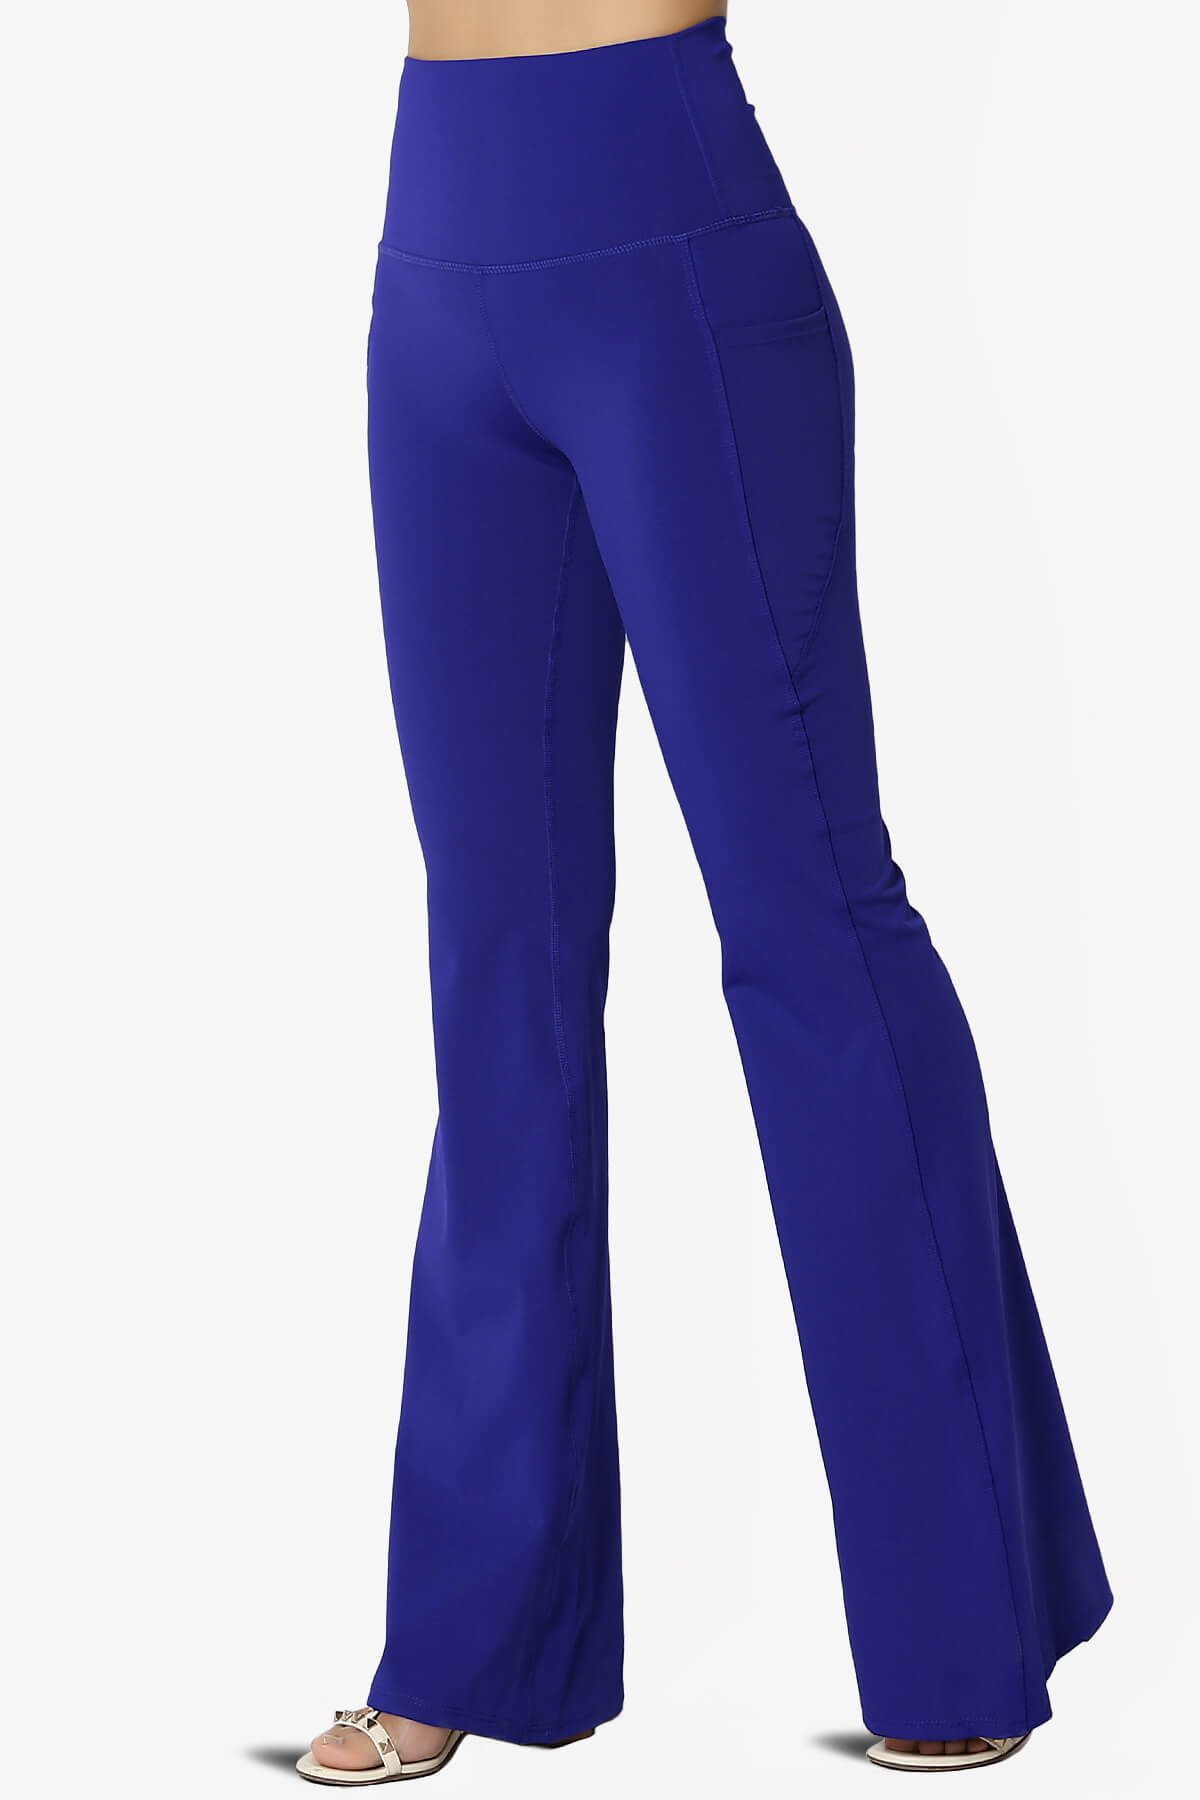 Gemma Athletic Pocket Flare Yoga Pants BRIGHT BLUE_3